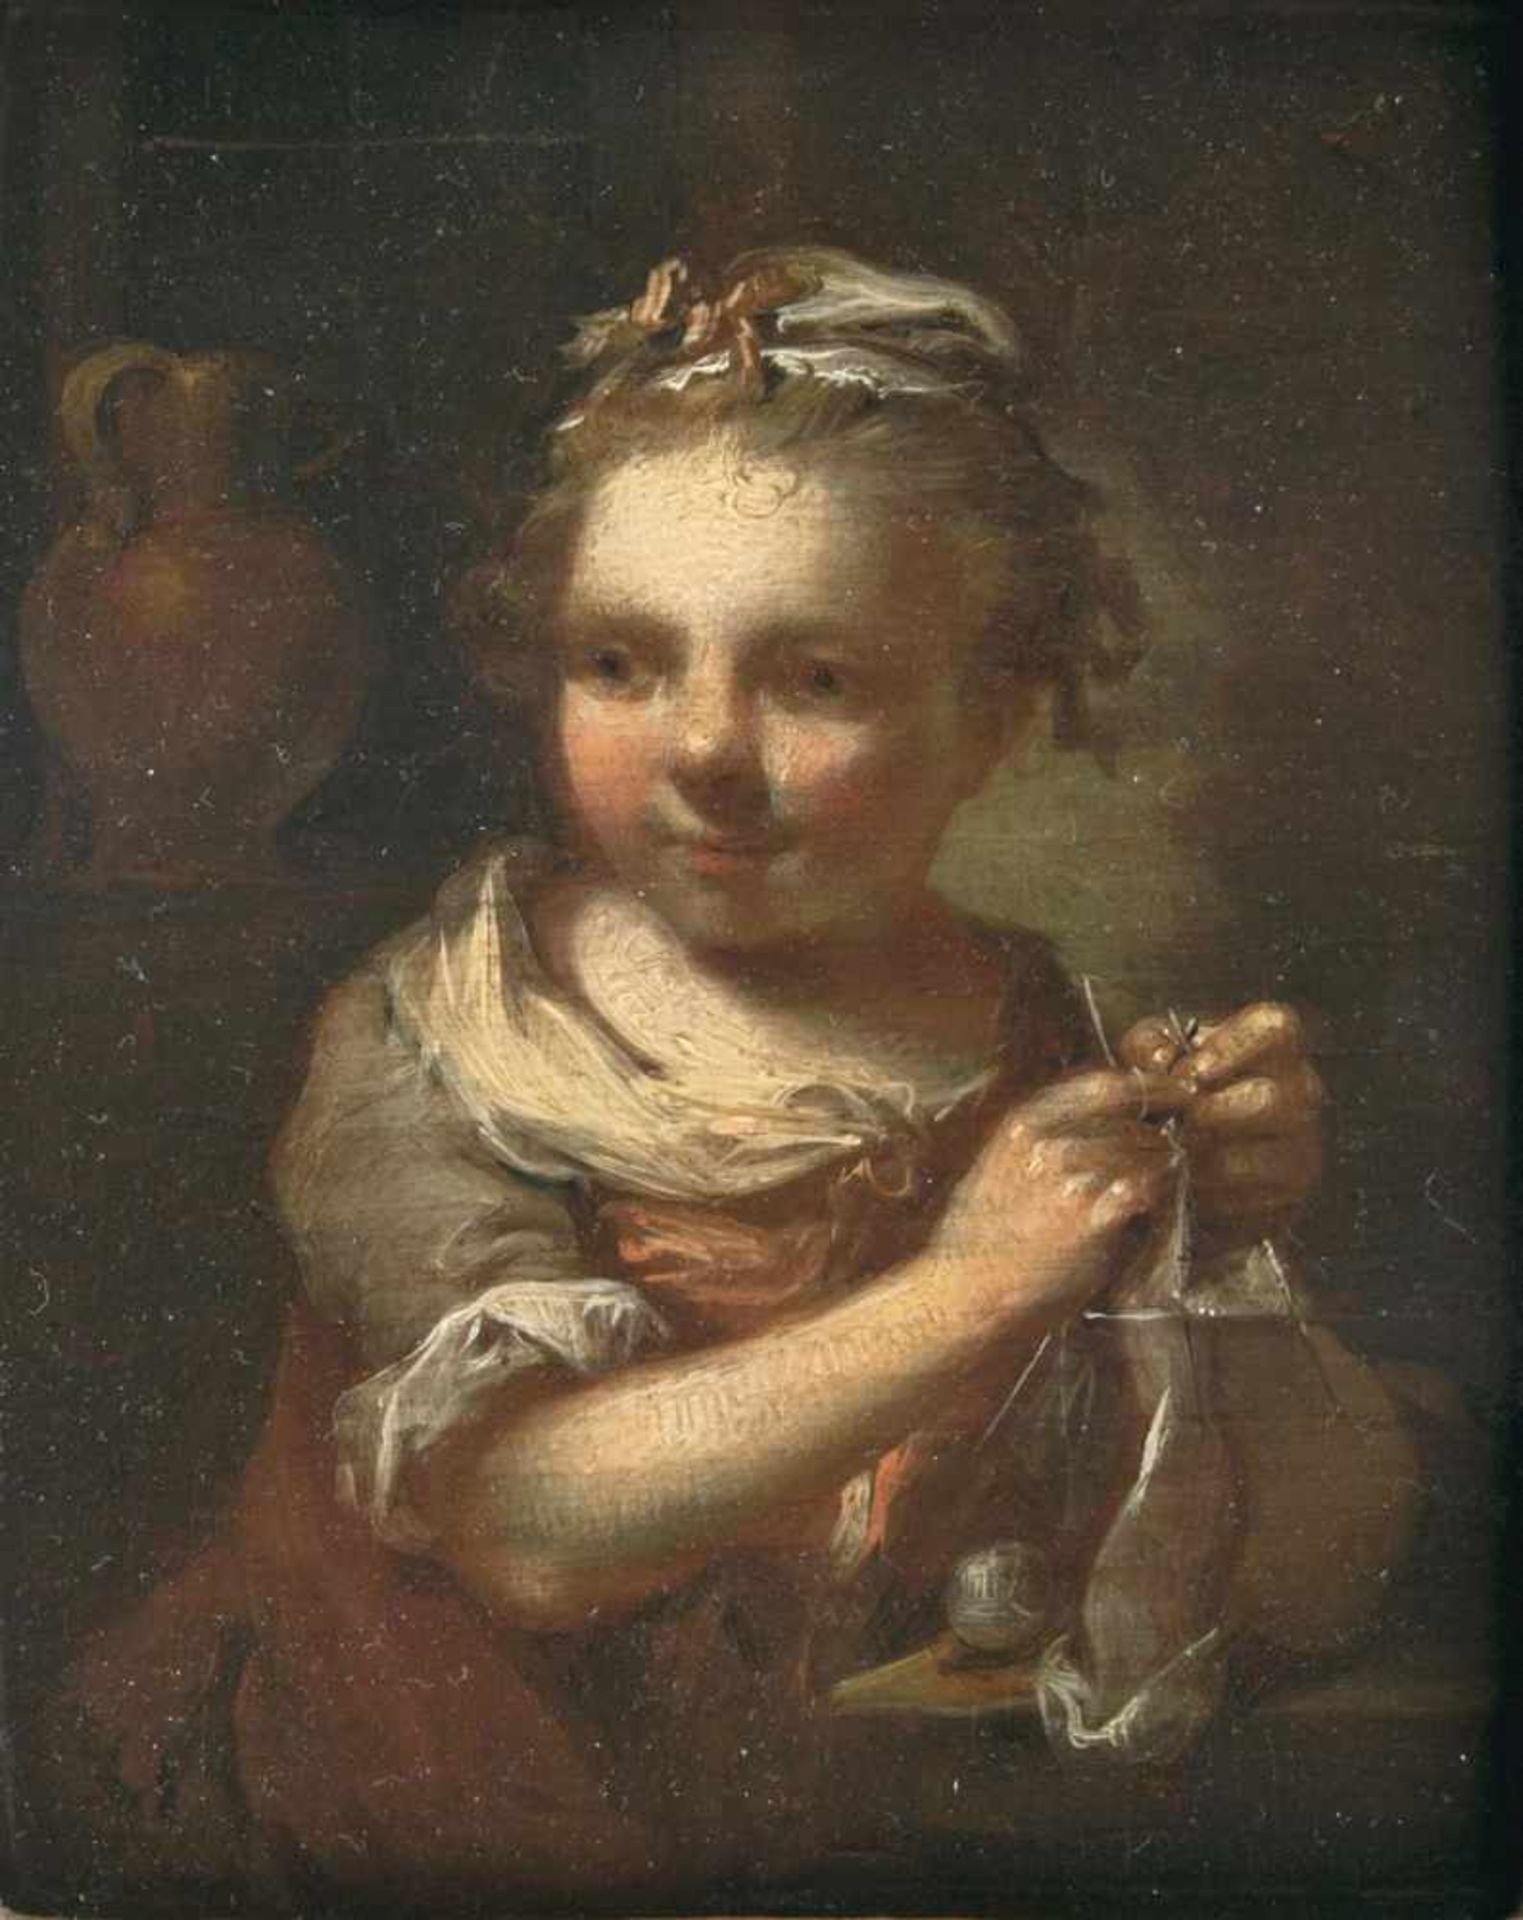 Seekatz, Johann Conrad(Grünstadt 1719 - Darmstadt 1768)Knitting GirlOil/wood, 15 x 12 cm, on the